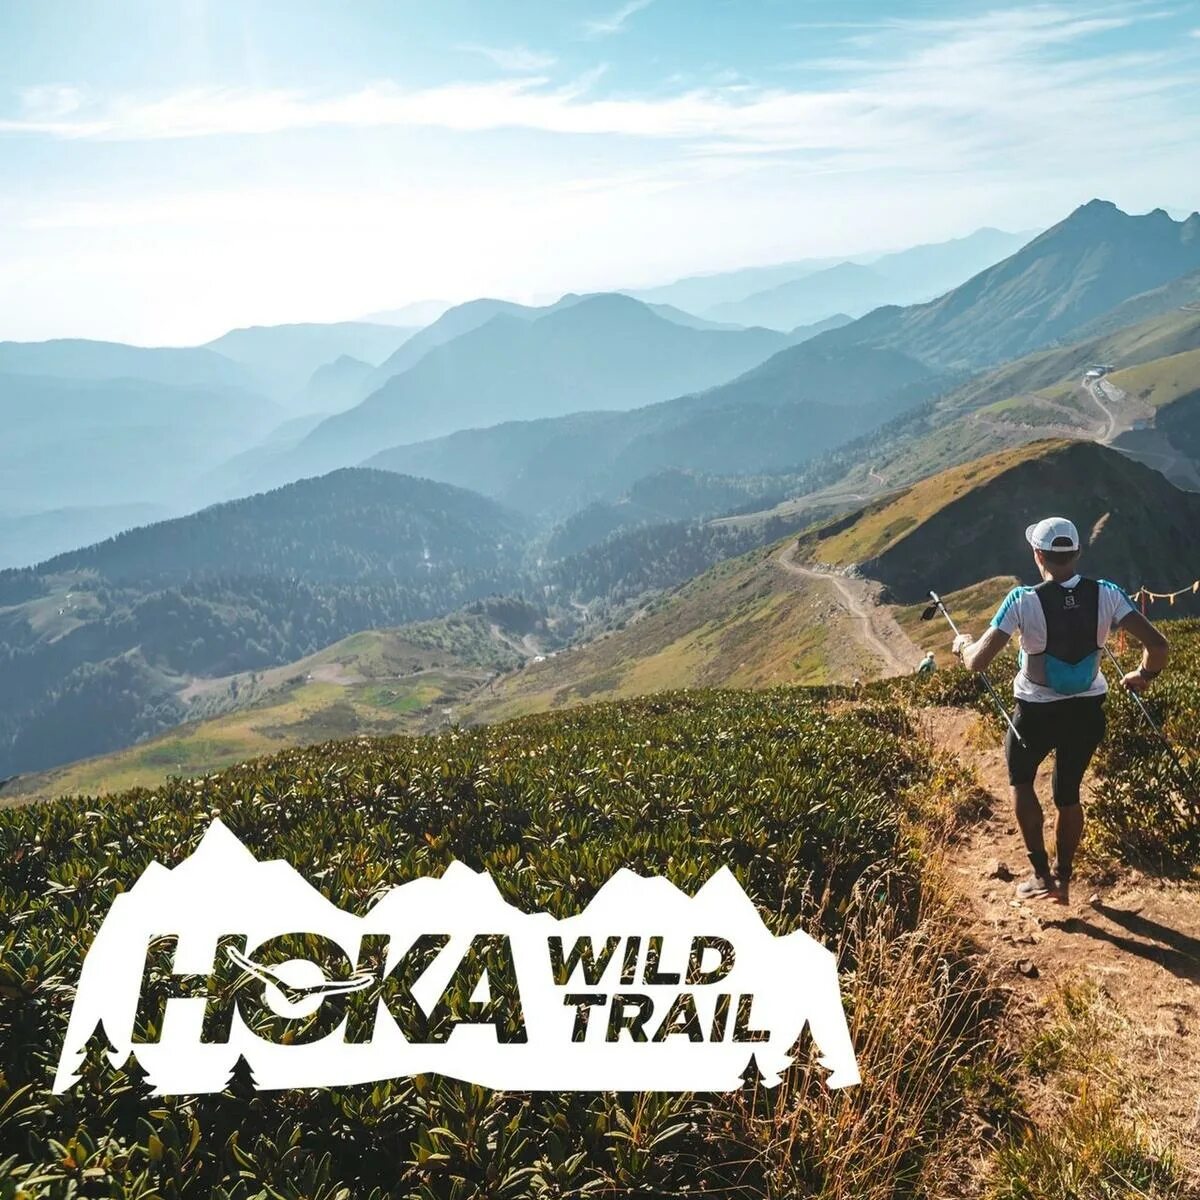 Вилд трейл. Hoka Wild Trail 2021. Hoka Trail 2022. Вилд Трейл 2022. Архыз Wild Trail.